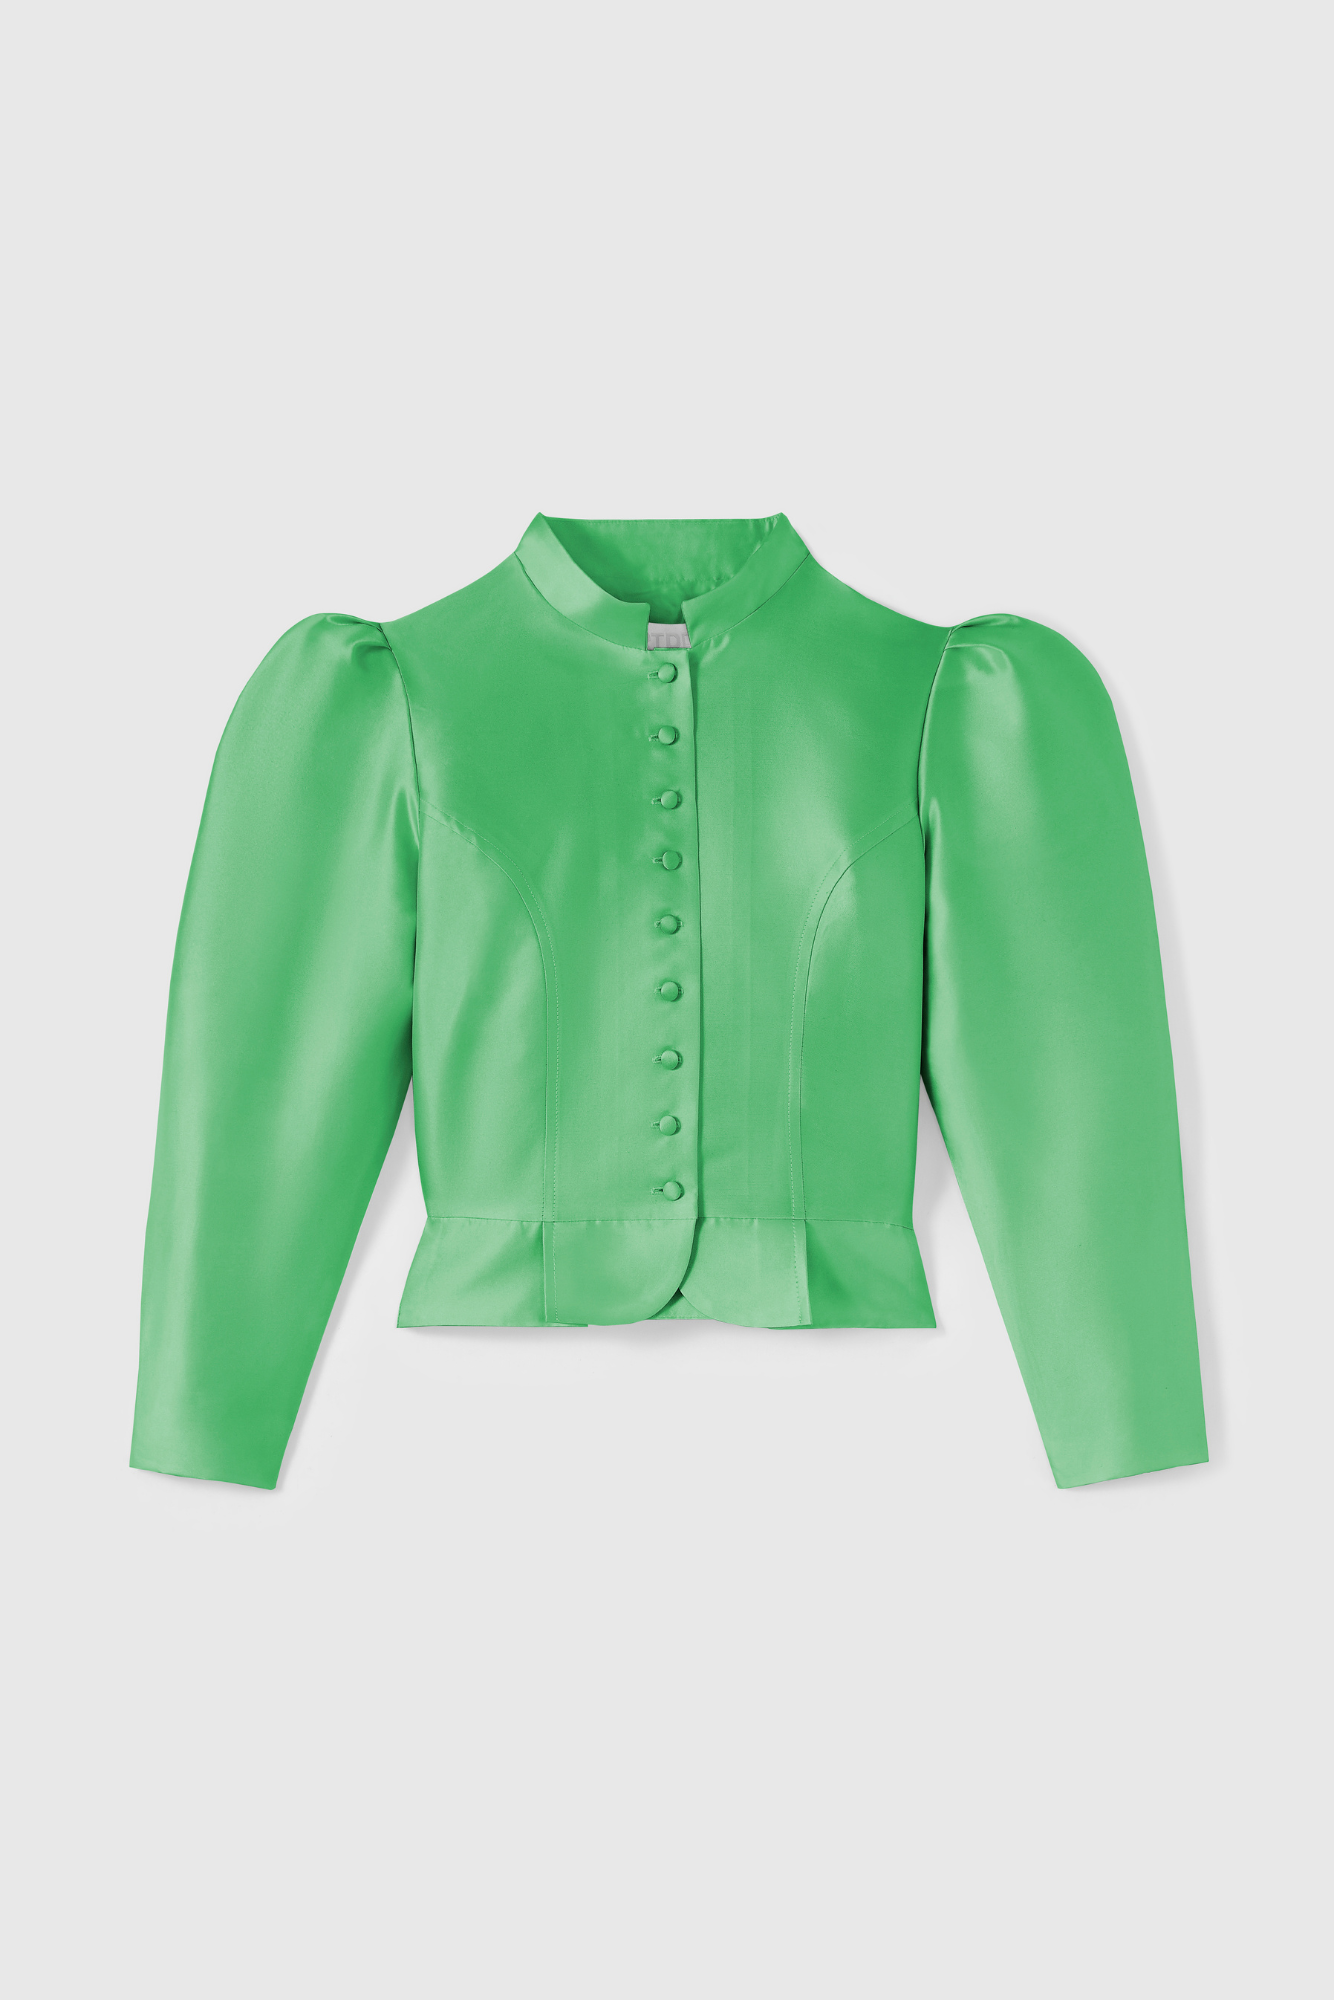 APPLE GREEN Satin Puff Sleeve Jacket